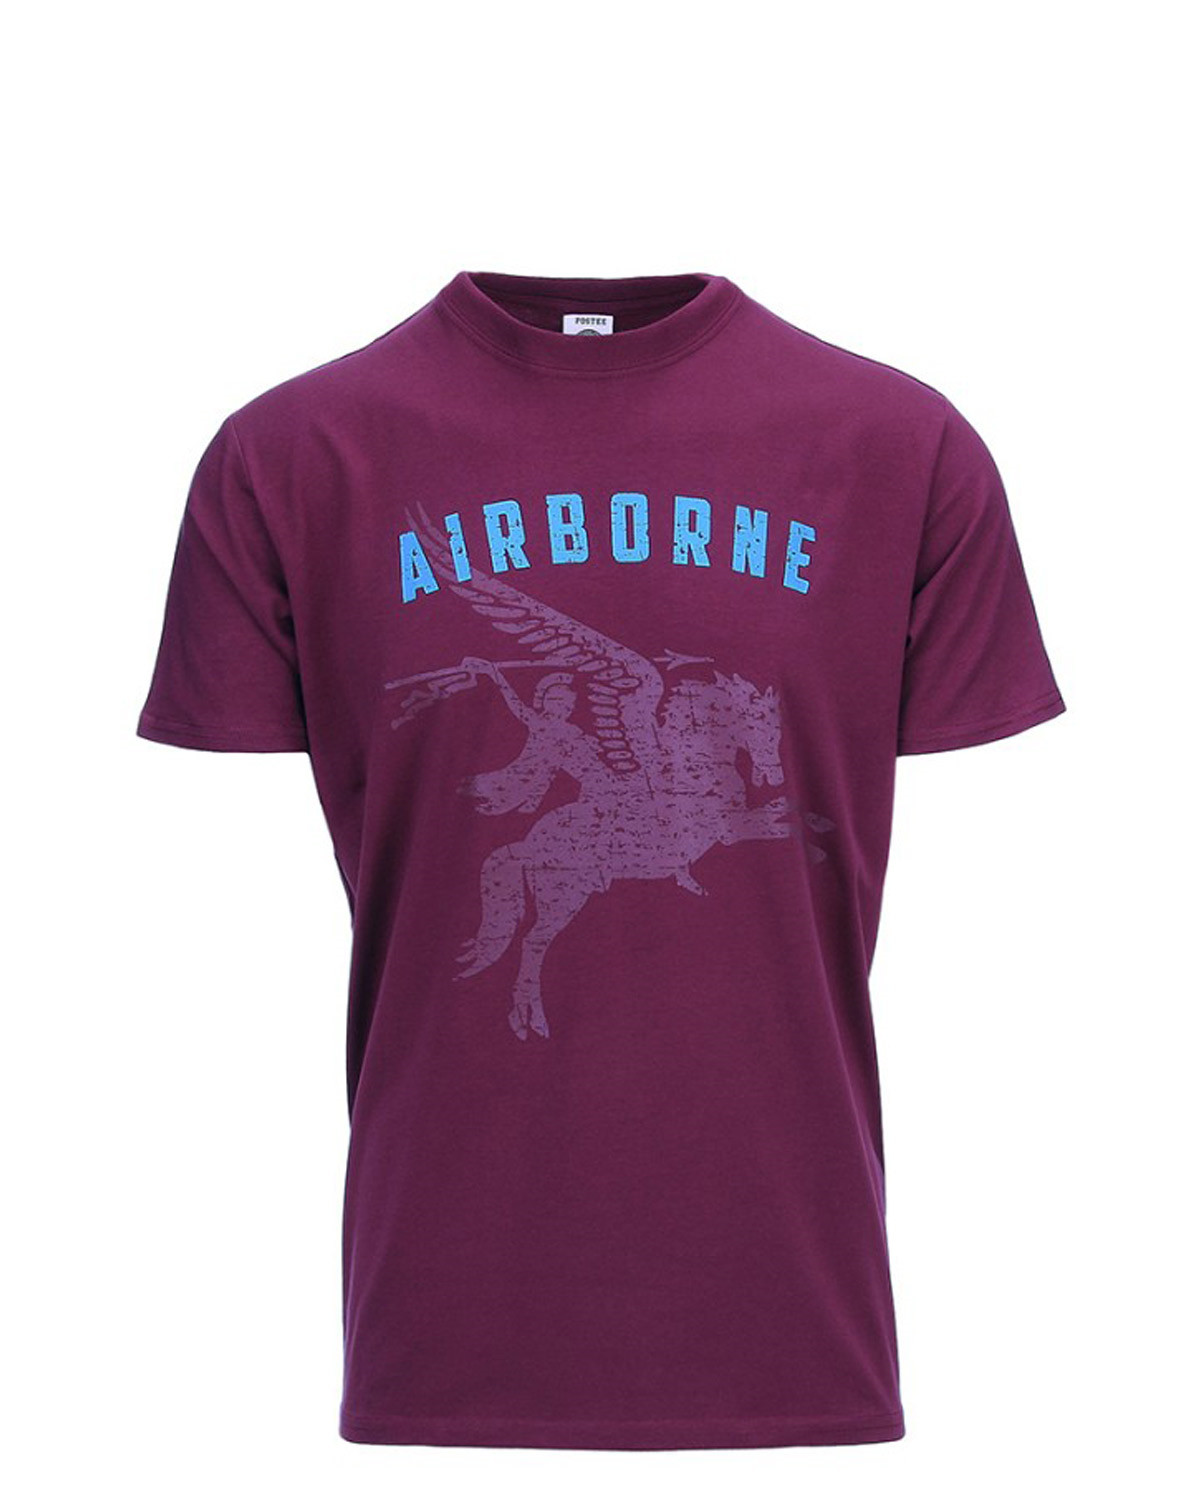 Billede af Fostex T-shirt Airborne Pegasus (Maroon, 2XL)